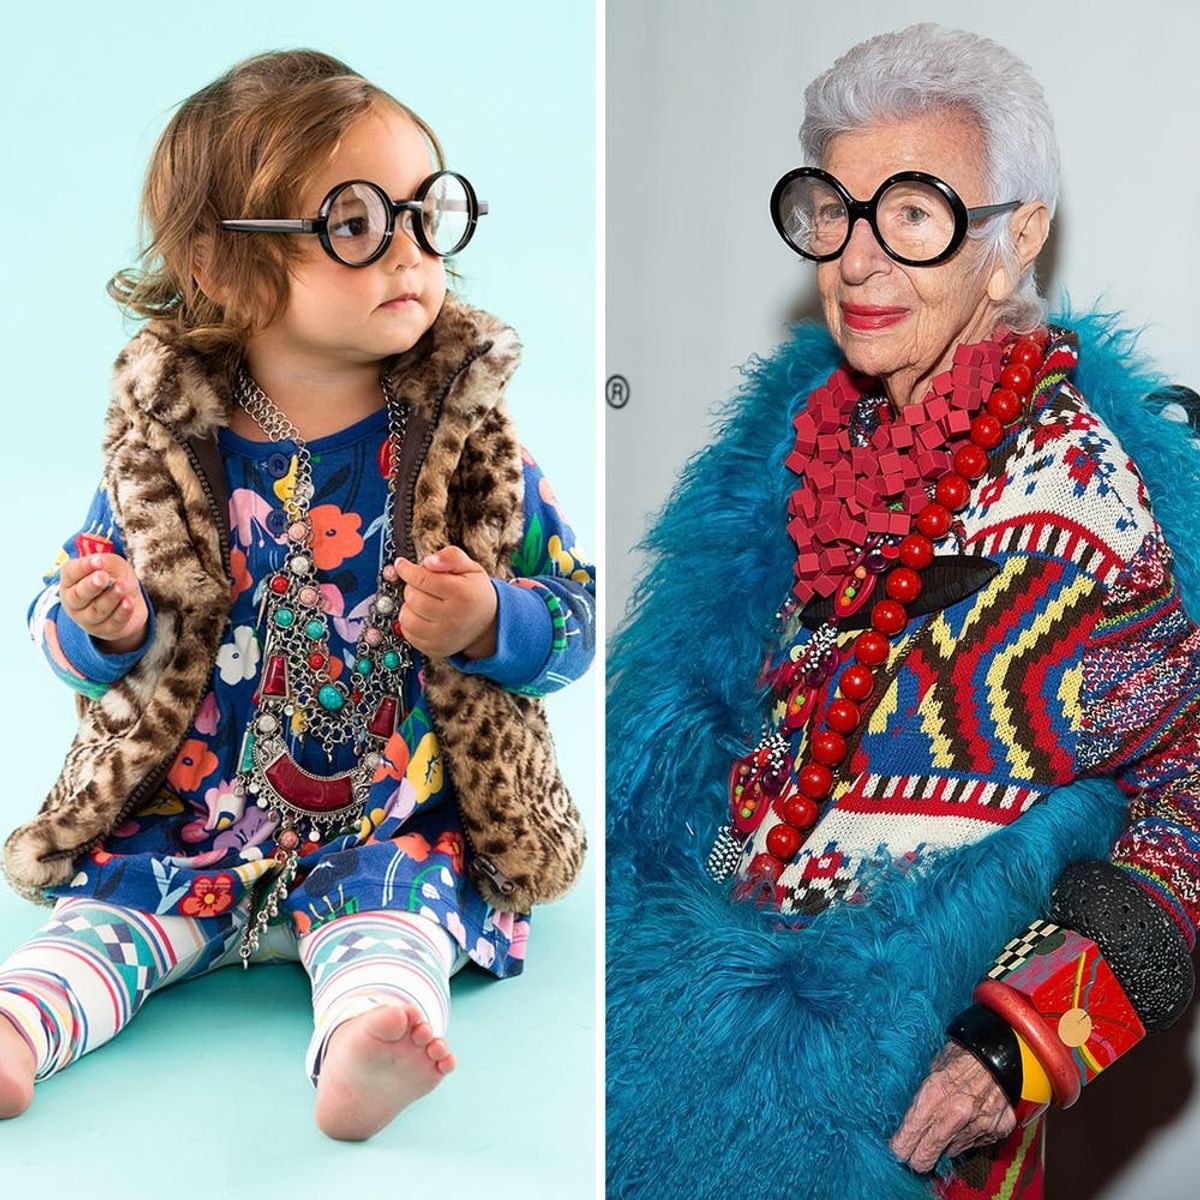 Dress Your Toddler as Style Icon Iris Apfel This Halloween